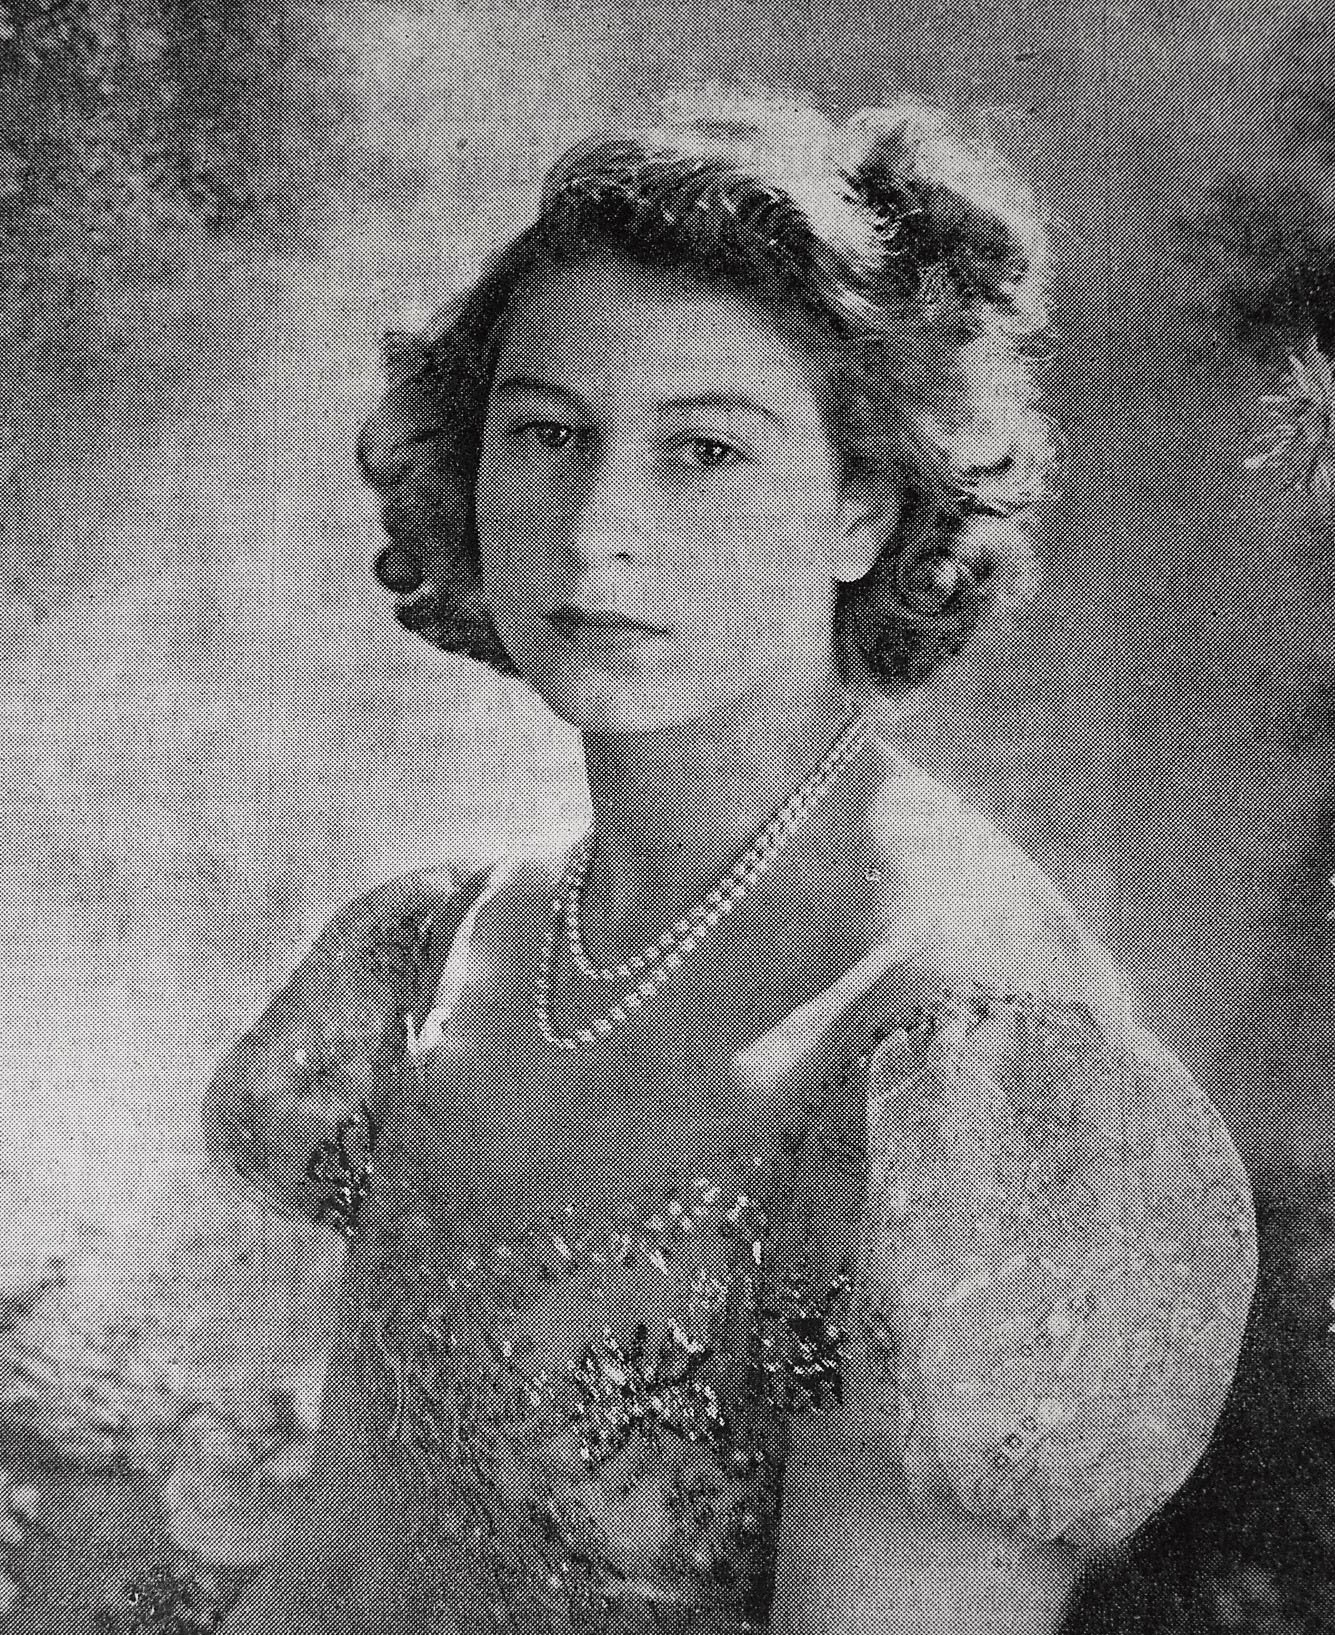 FUTURE QUEEN: HRH Princess Elizabeth celebrated her 20th birthday